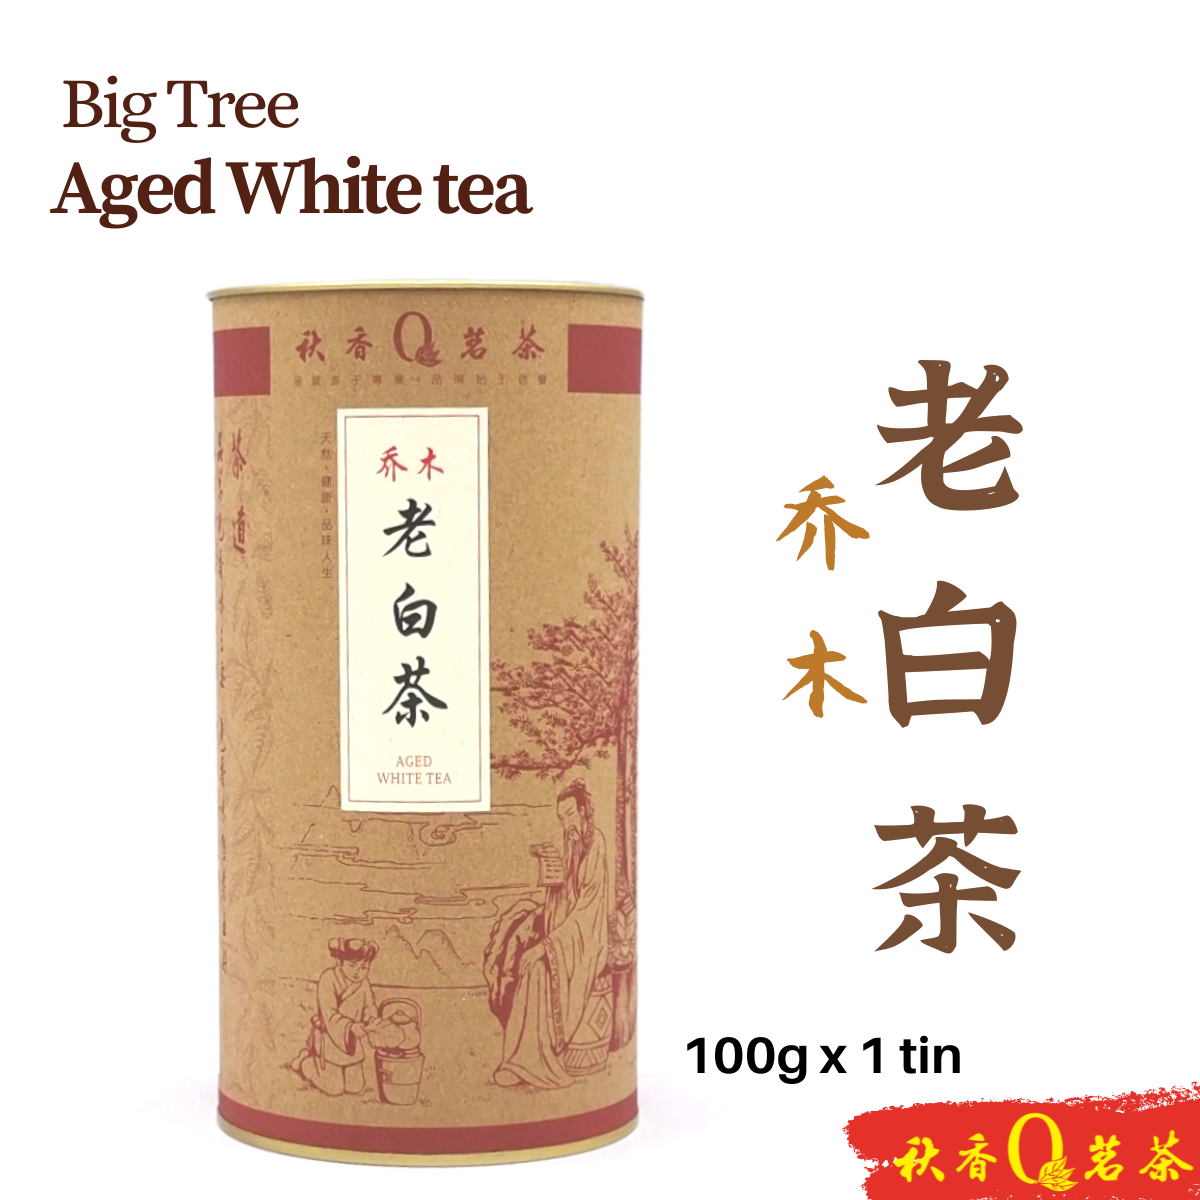 乔木老白茶 Aged White Tea (Big Tree)【100g】【白茶 White Tea】